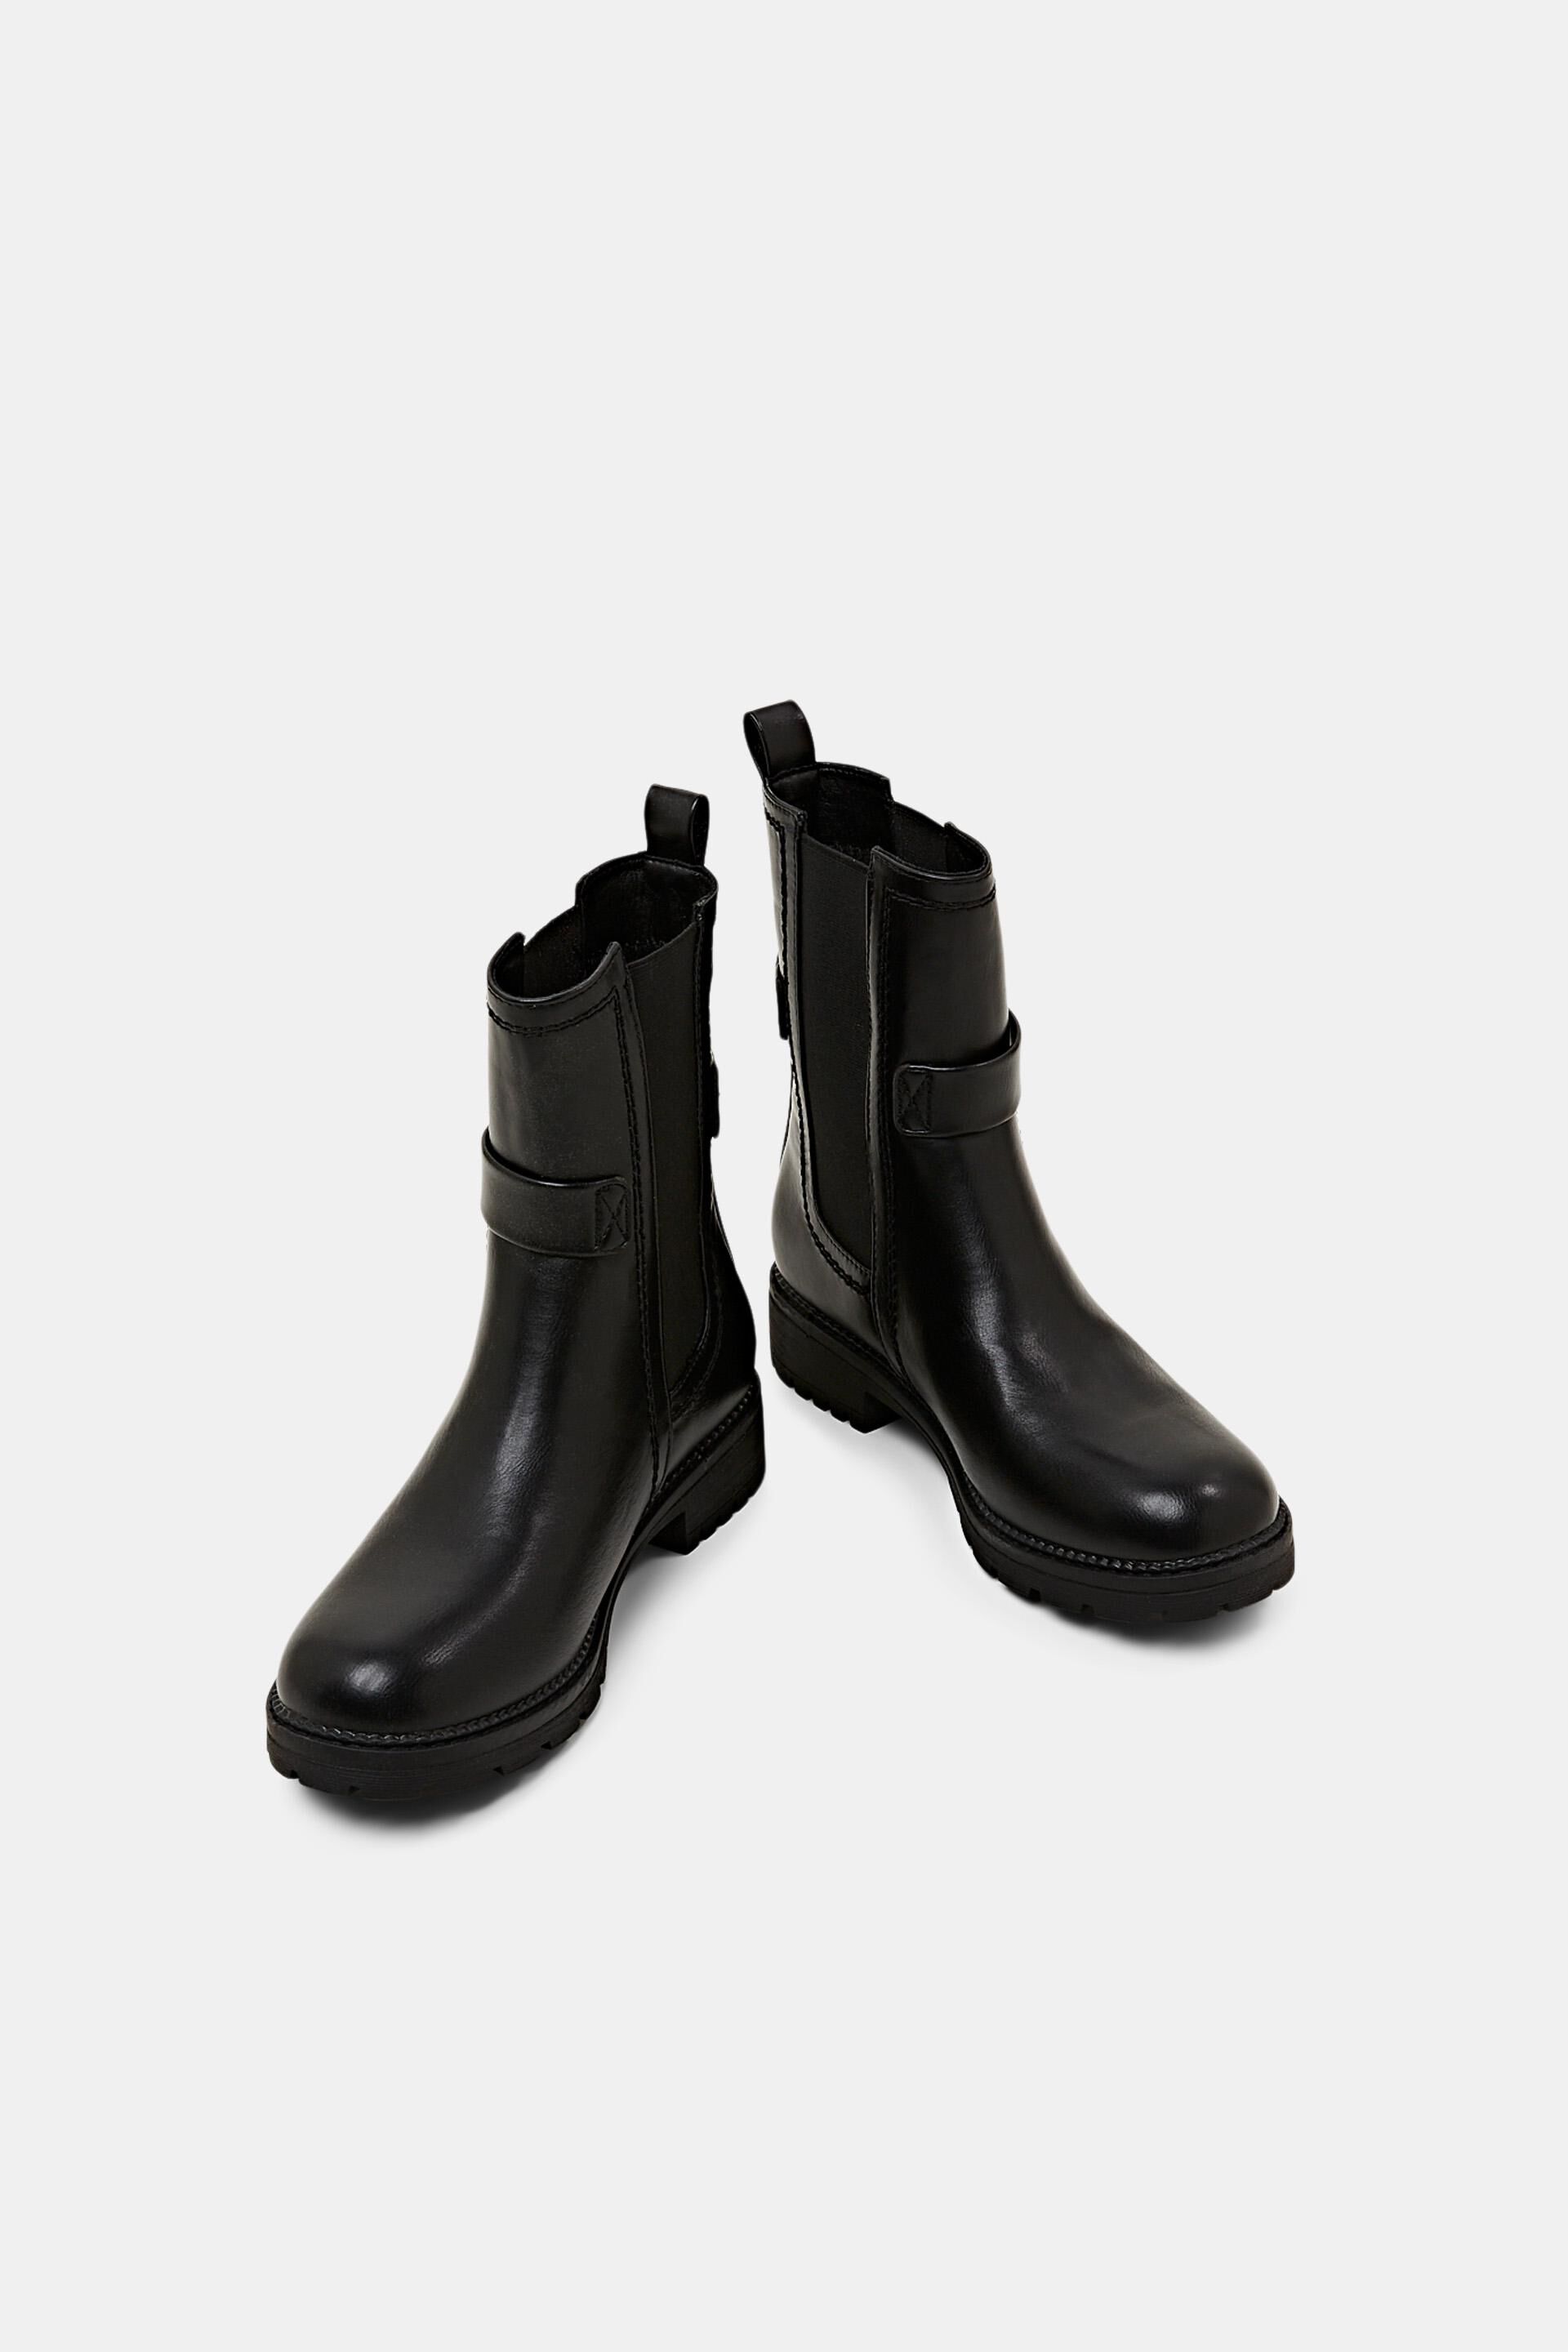 ESPRIT - Buckle Detail Vegan Leather Chelsea Boots at our online shop